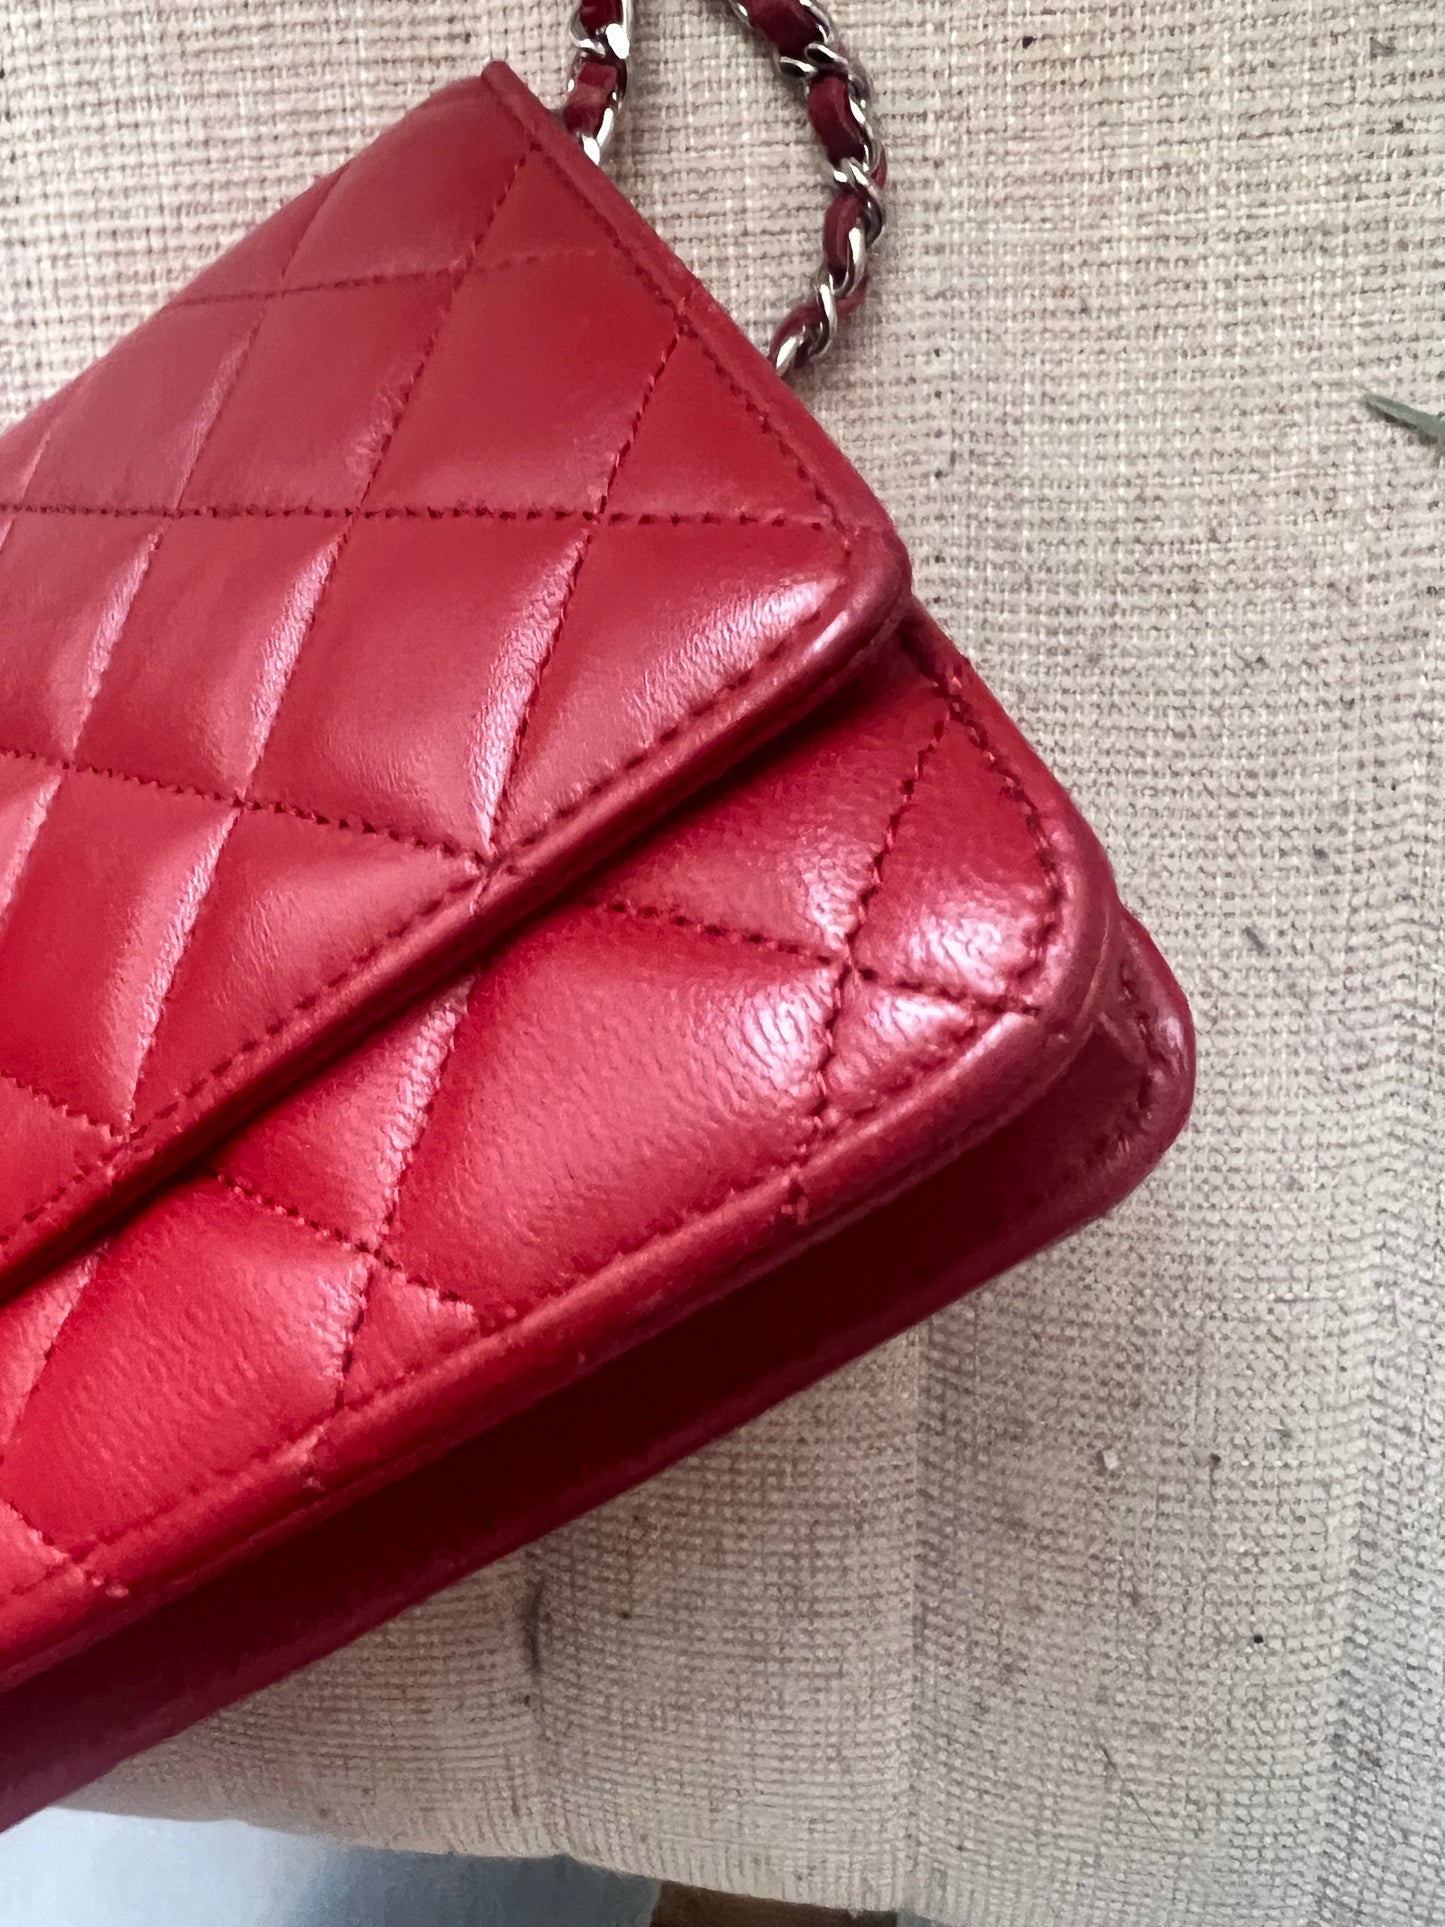 Chanel cherry red lambskin WOC wallet on chain crossbody bag SHW